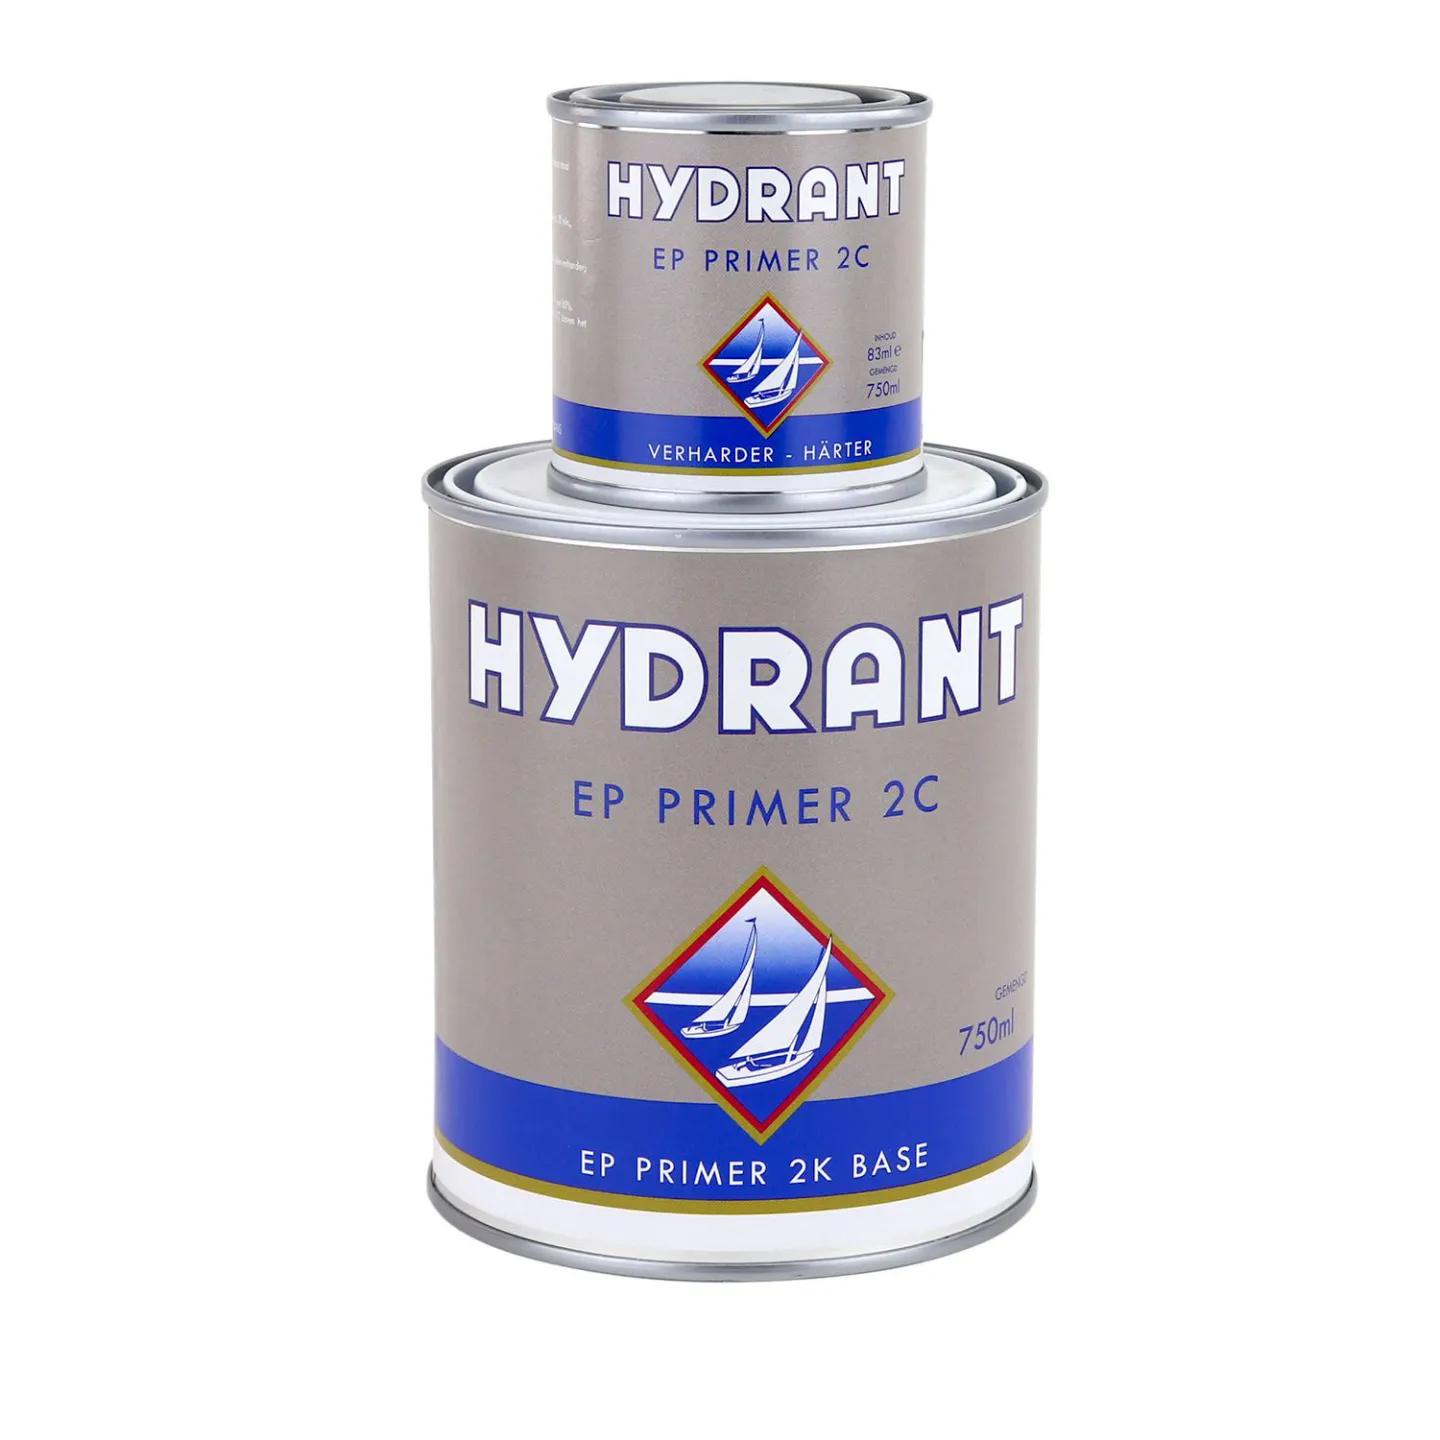 Hydrant Epoxy primer 2c.